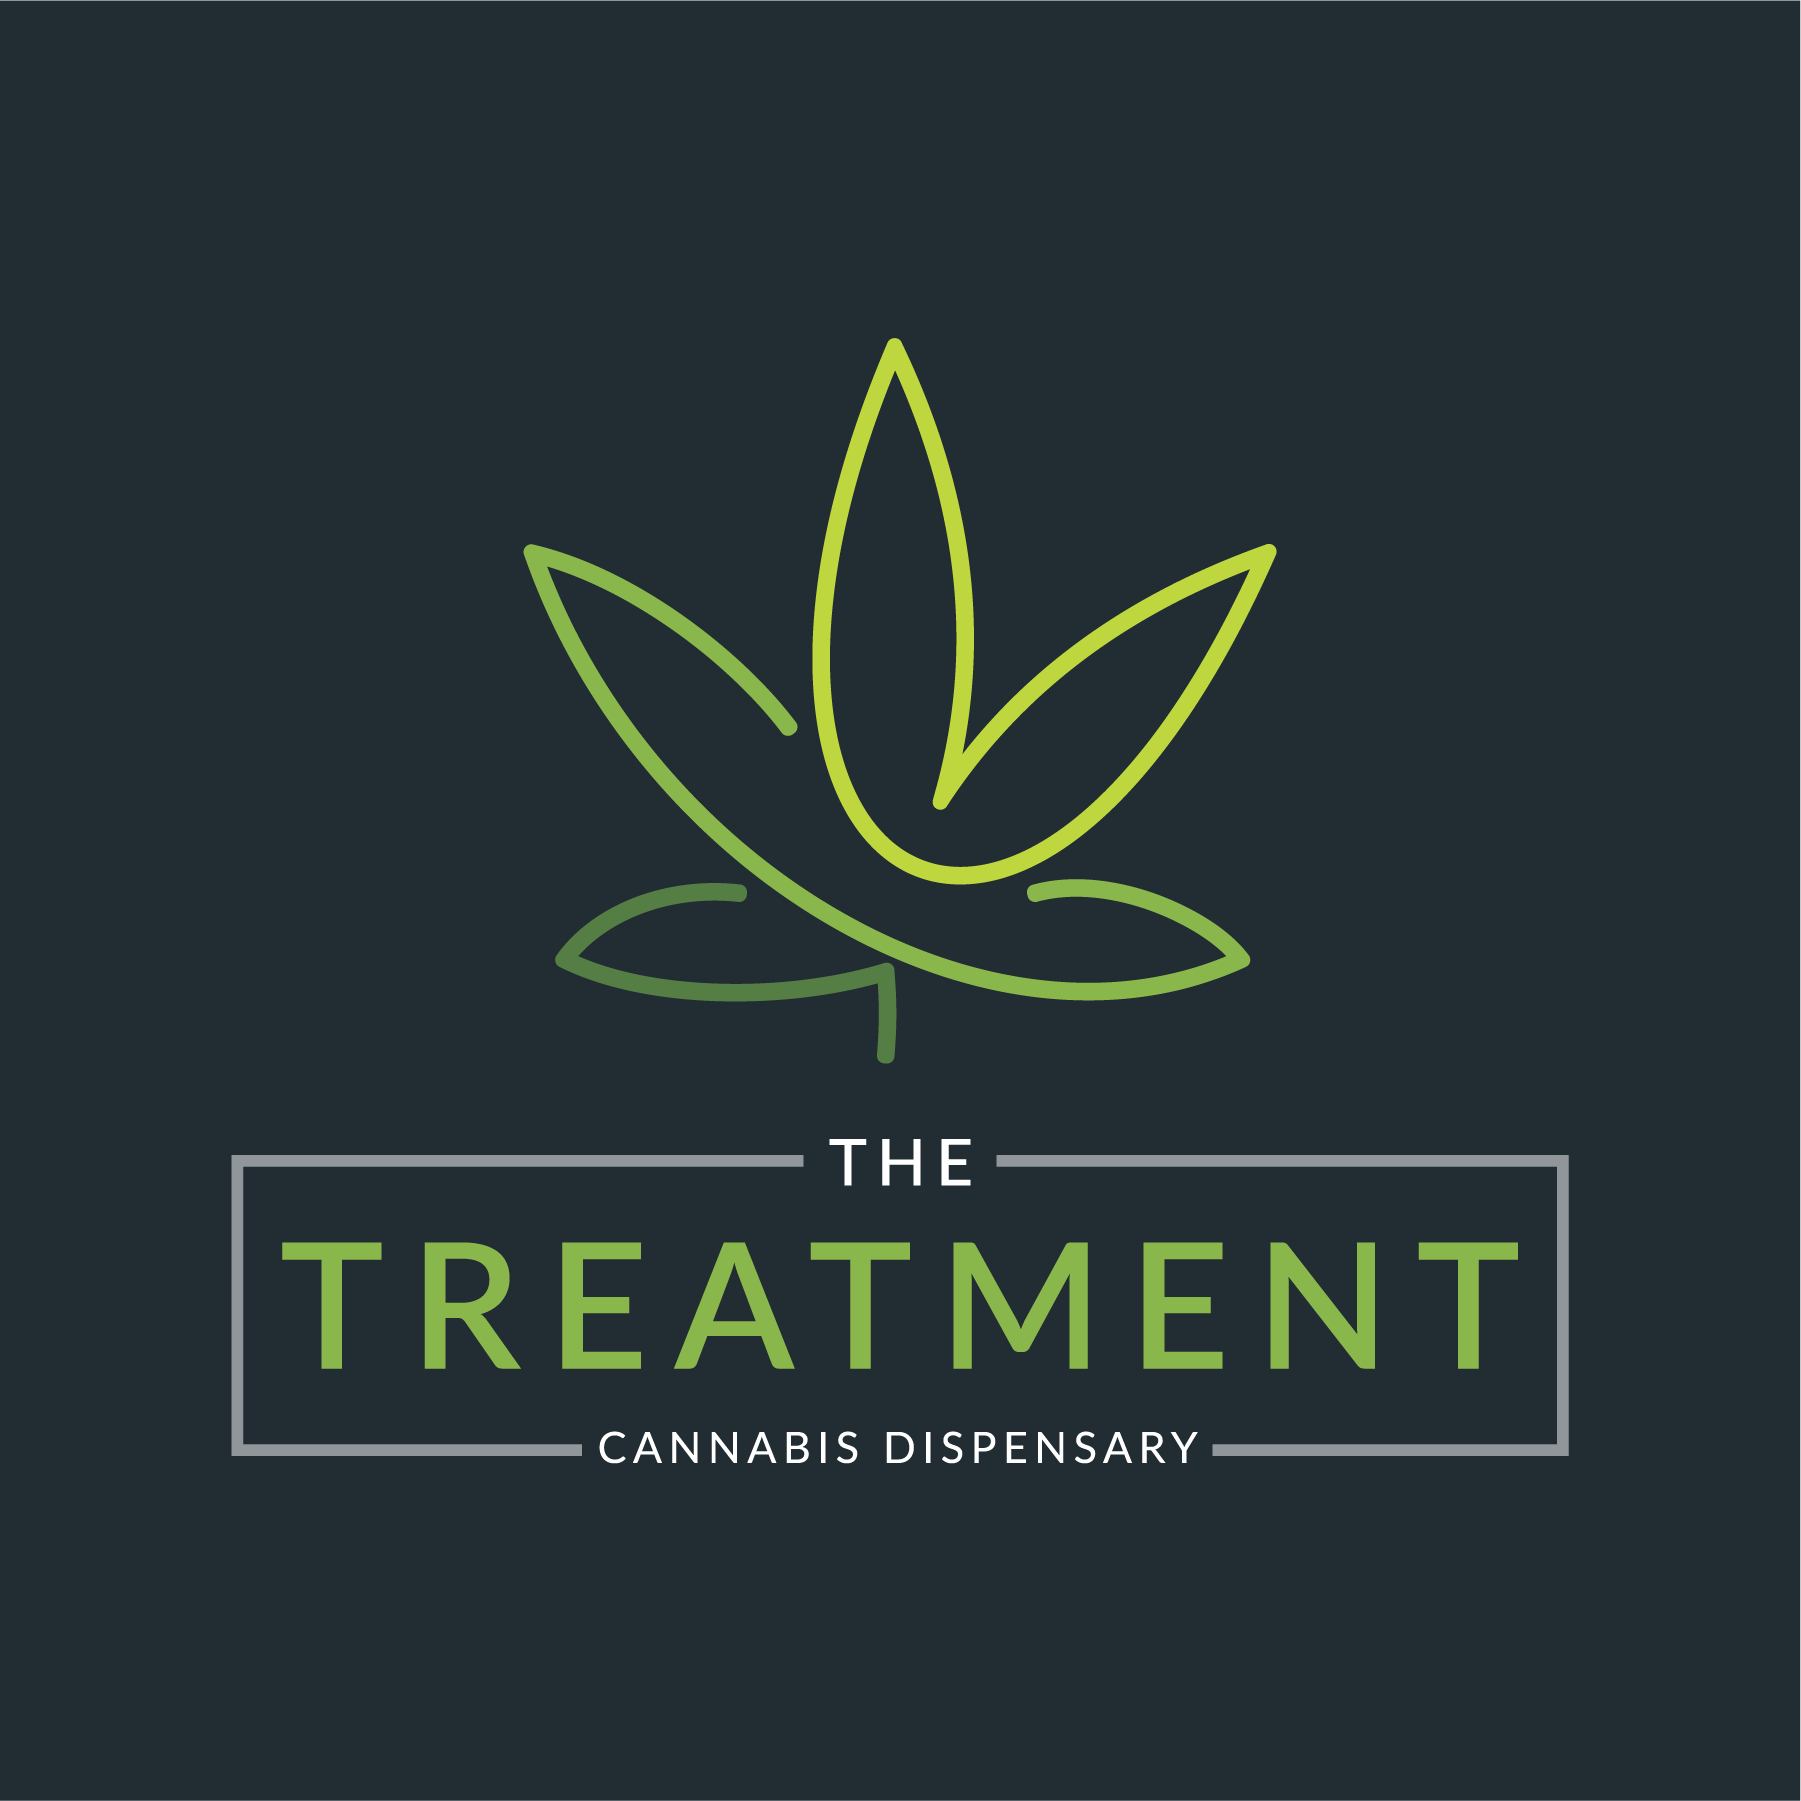 The Treatment Cannabis Dispensary logo